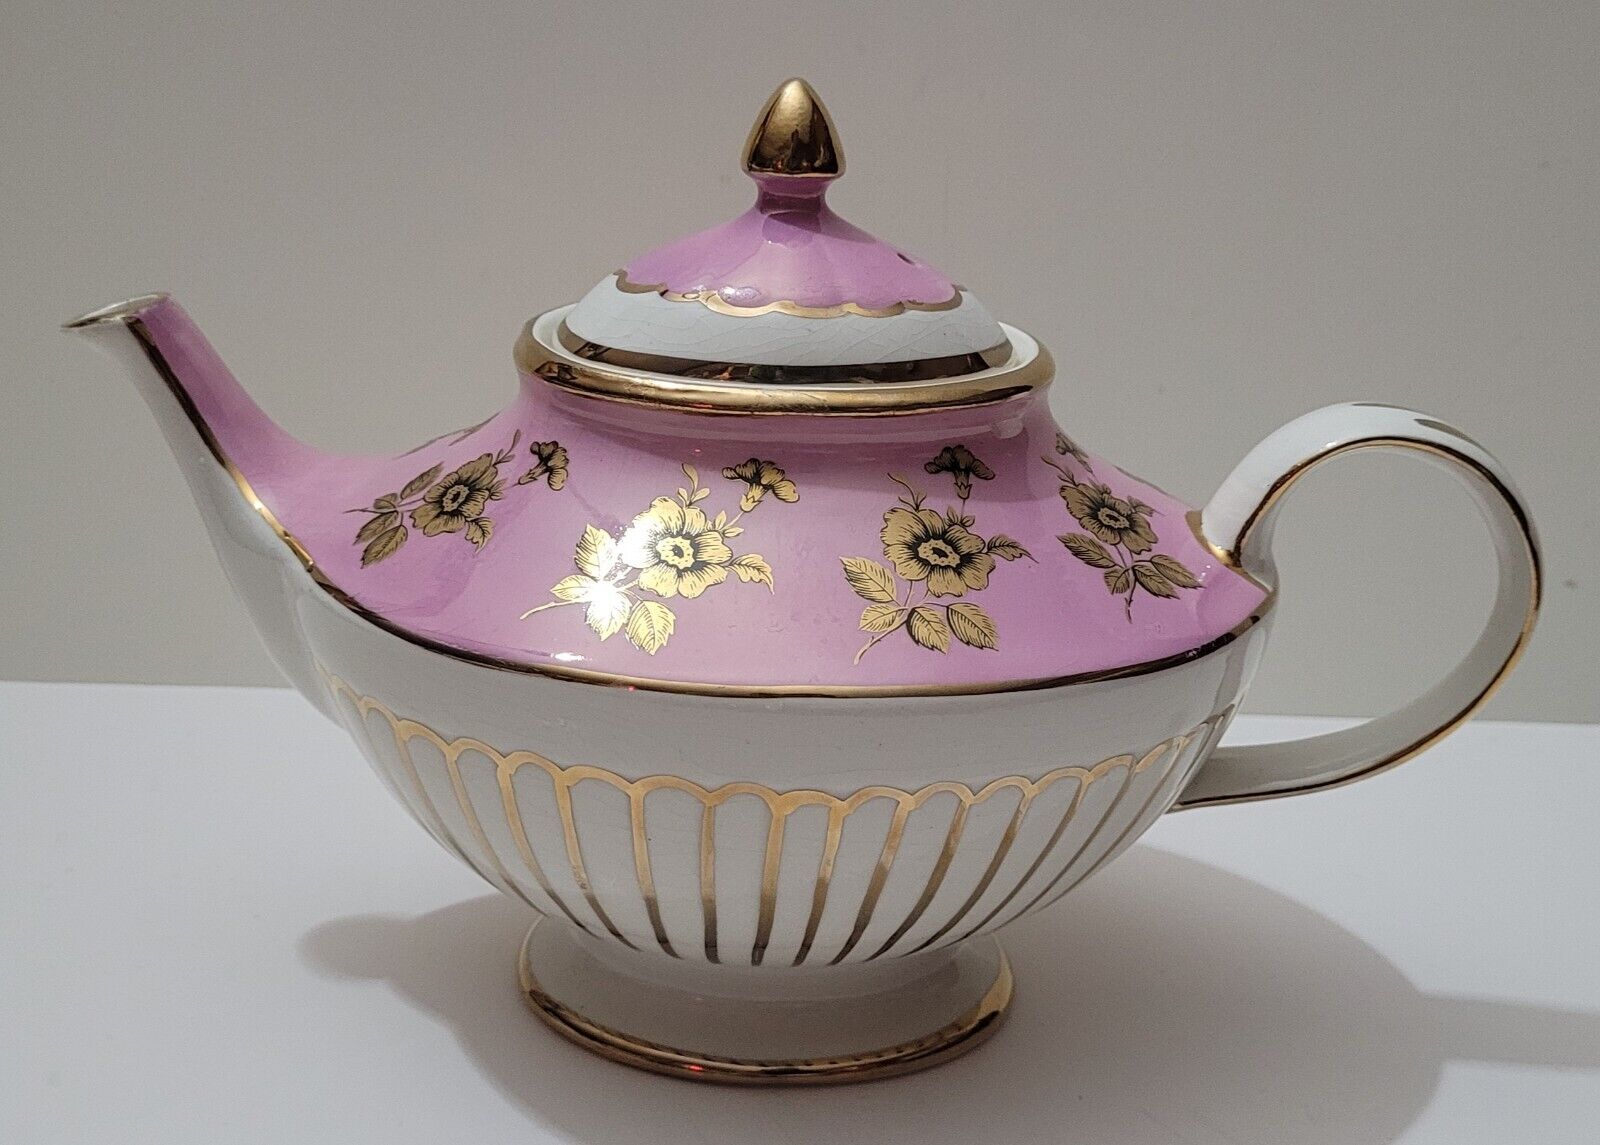 Vintage Arthur Wood Teapot Genie Lamp, White/Pink, Roses Gold Trim #5415